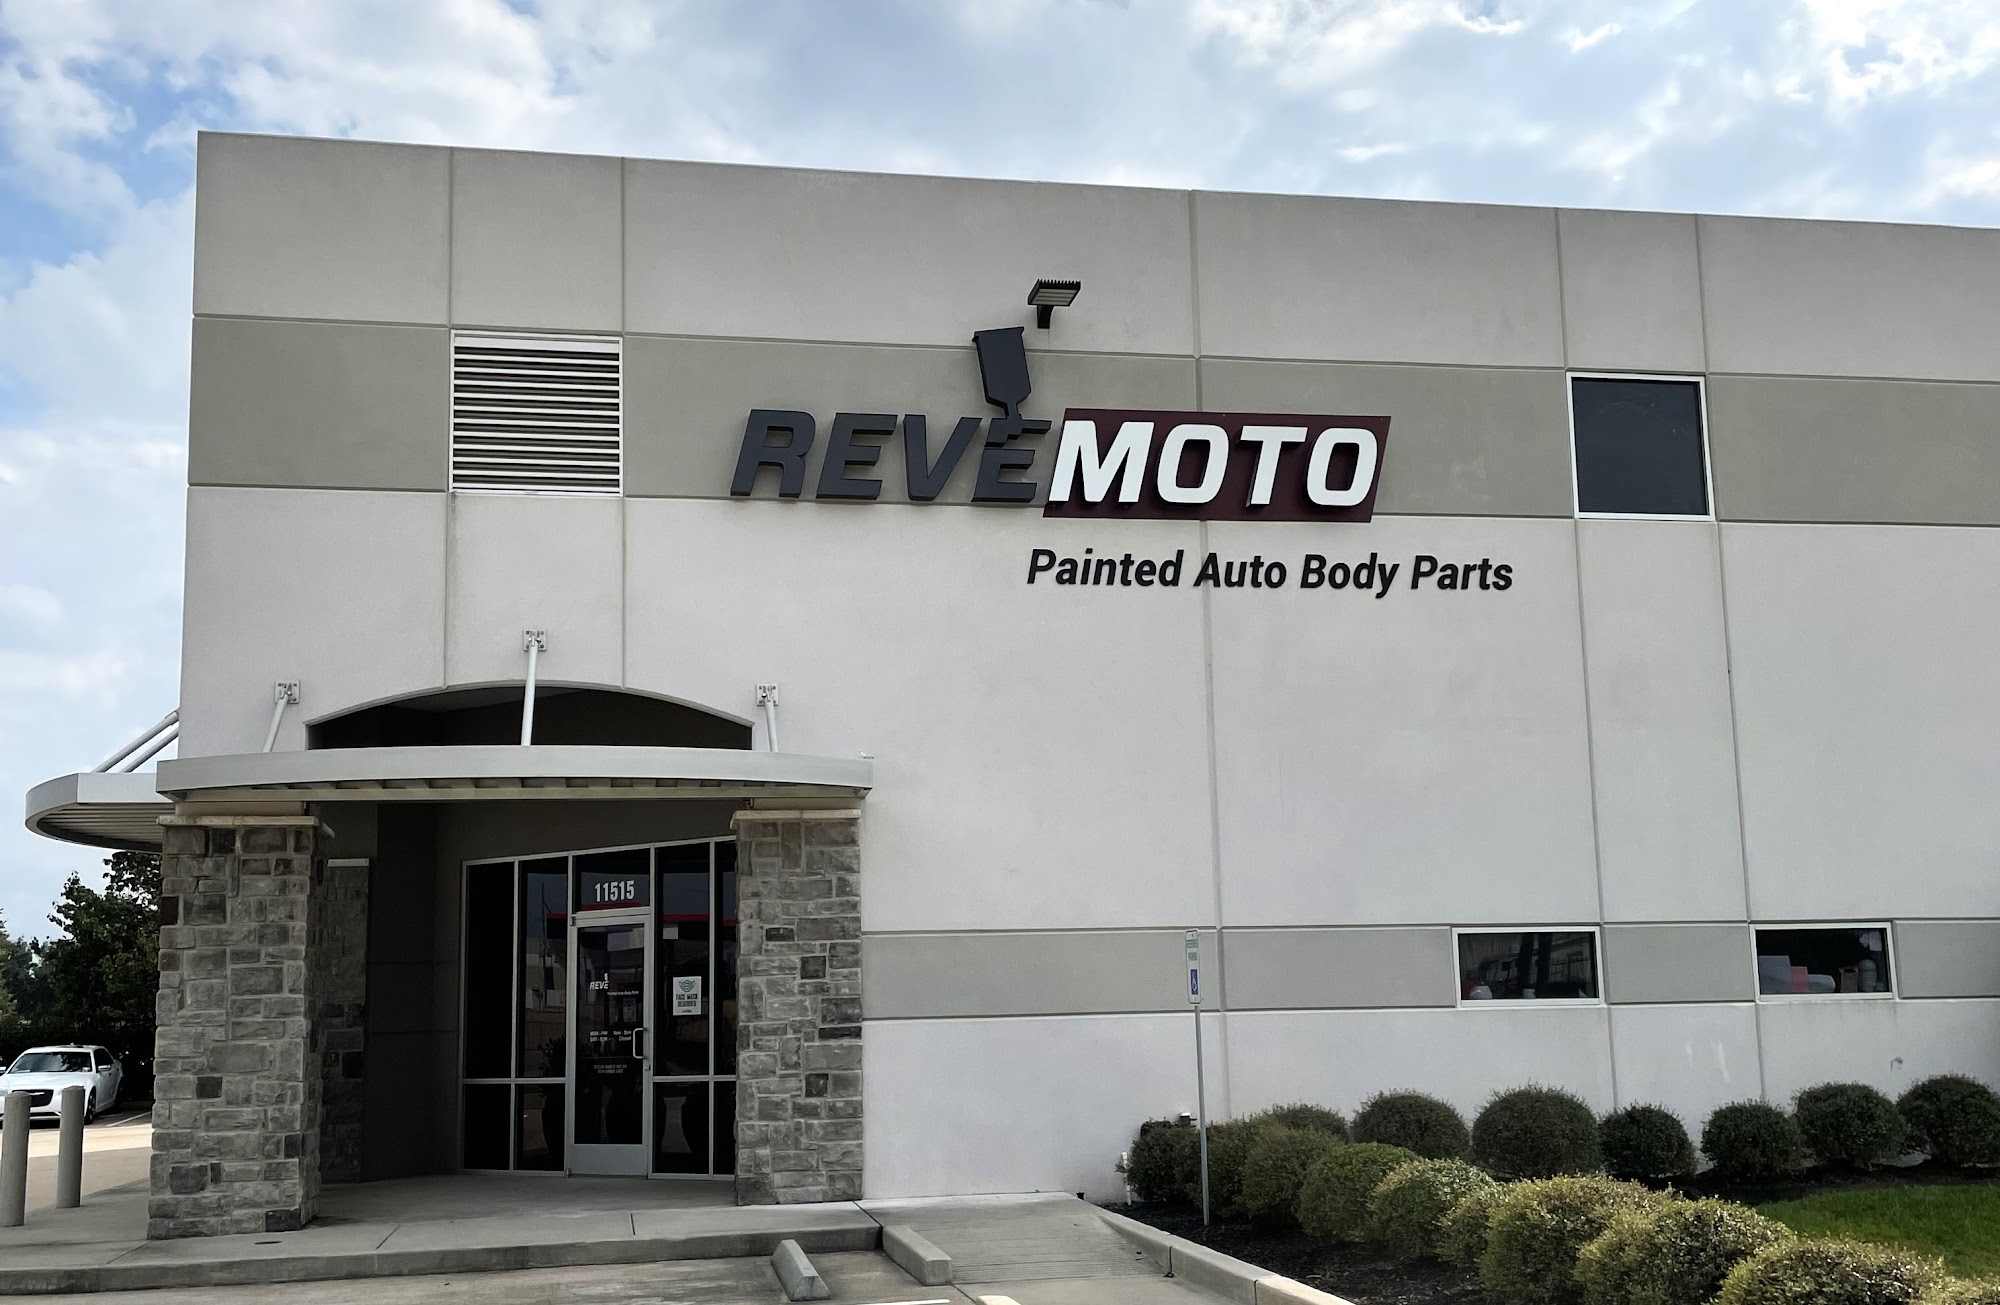 ReveMoto - Painted Auto Body Parts